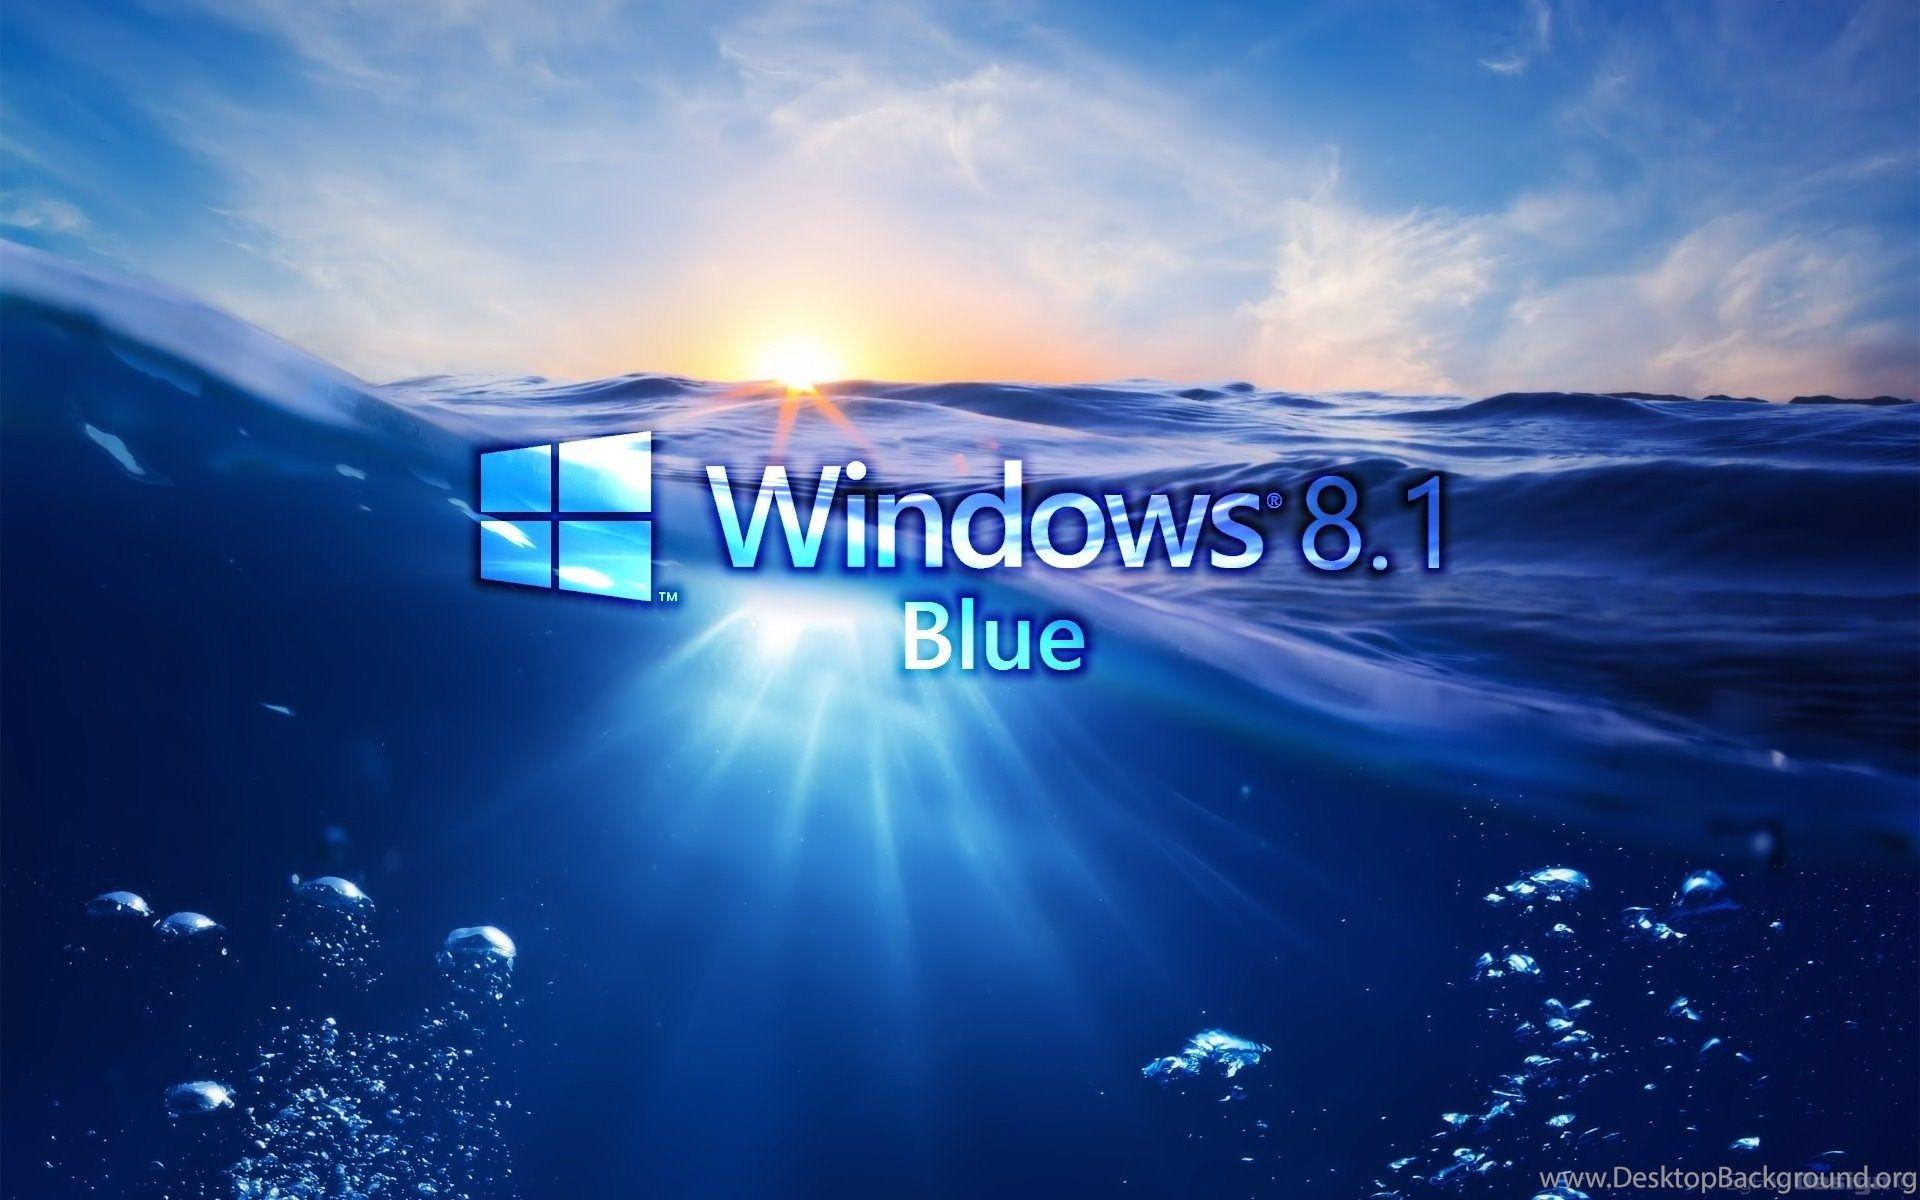 HD Wallpaper For Windows 8.1 Desktop Background